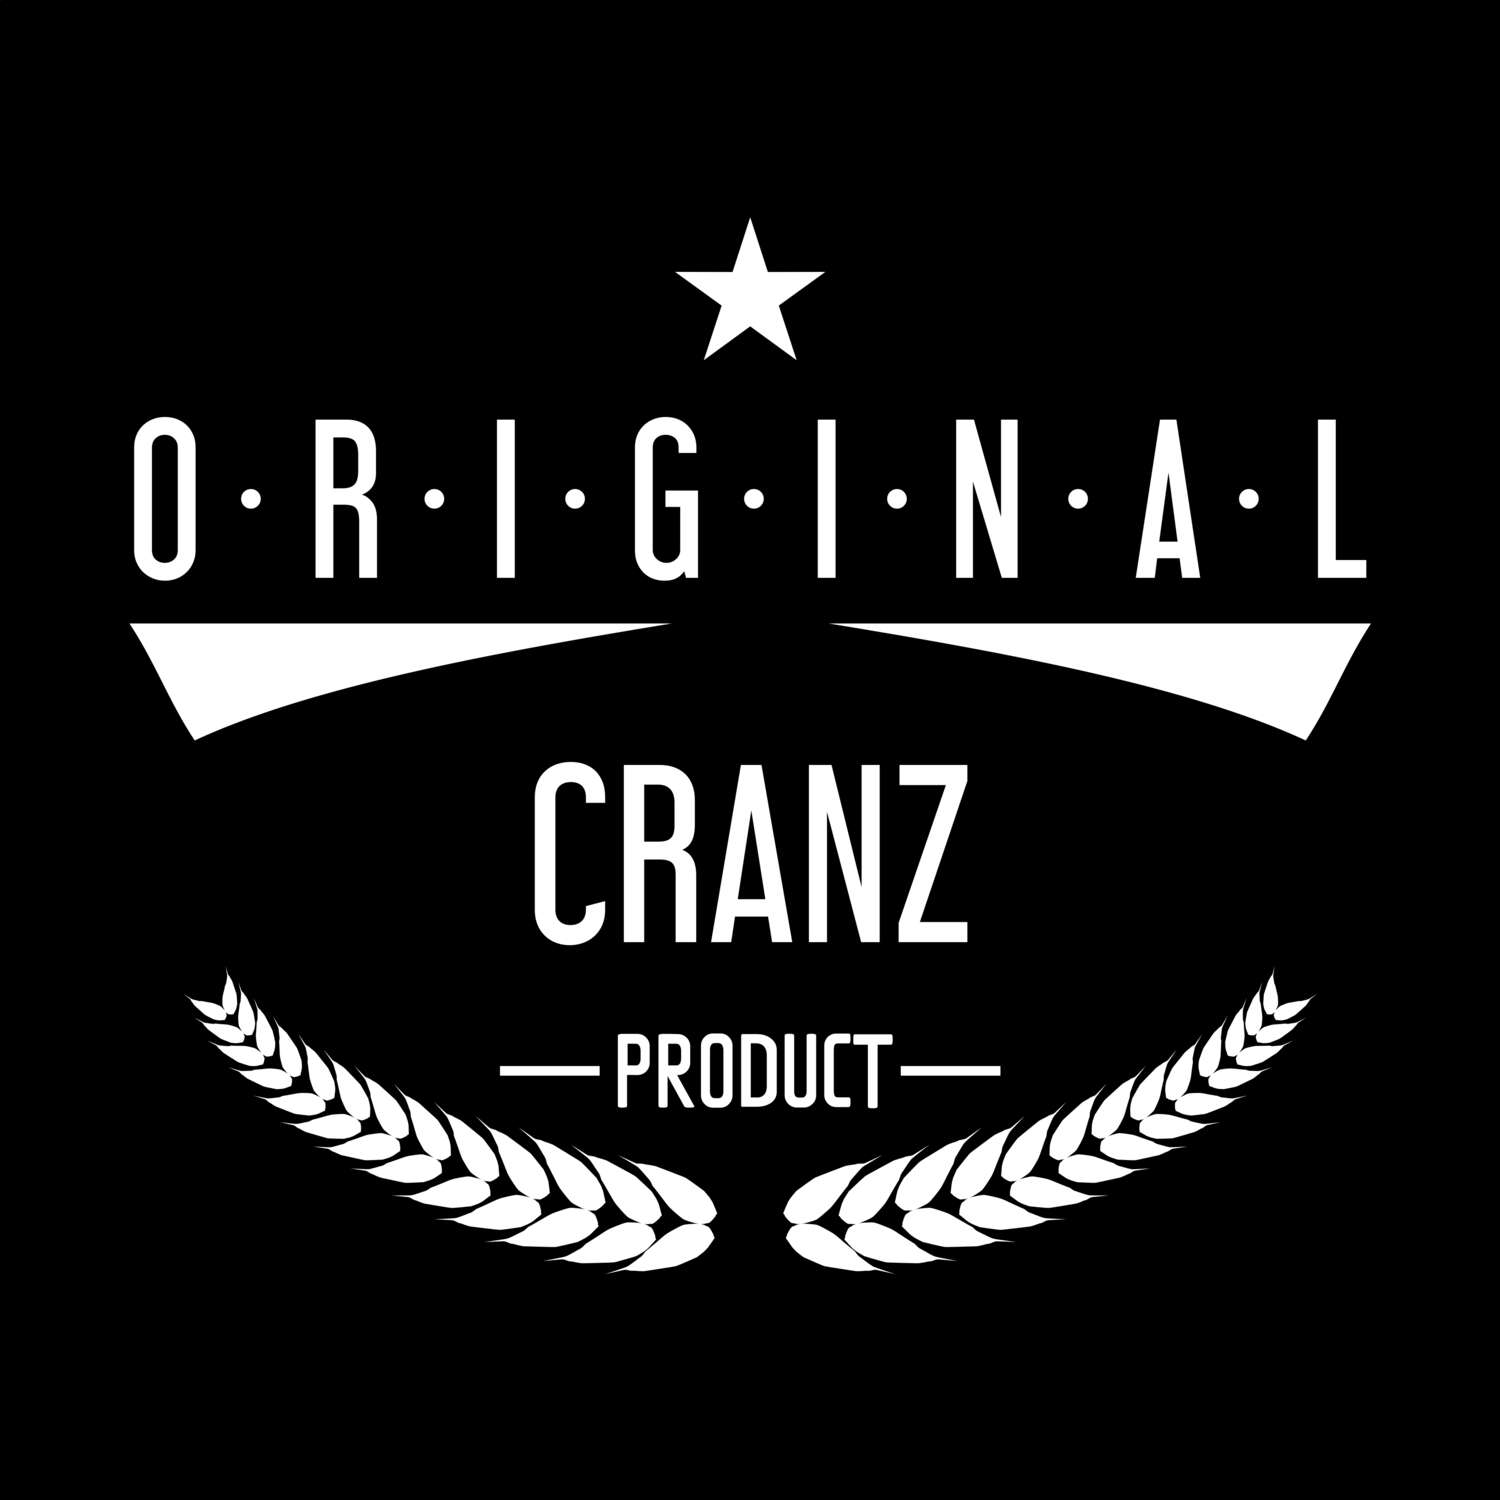 Cranz T-Shirt »Original Product«